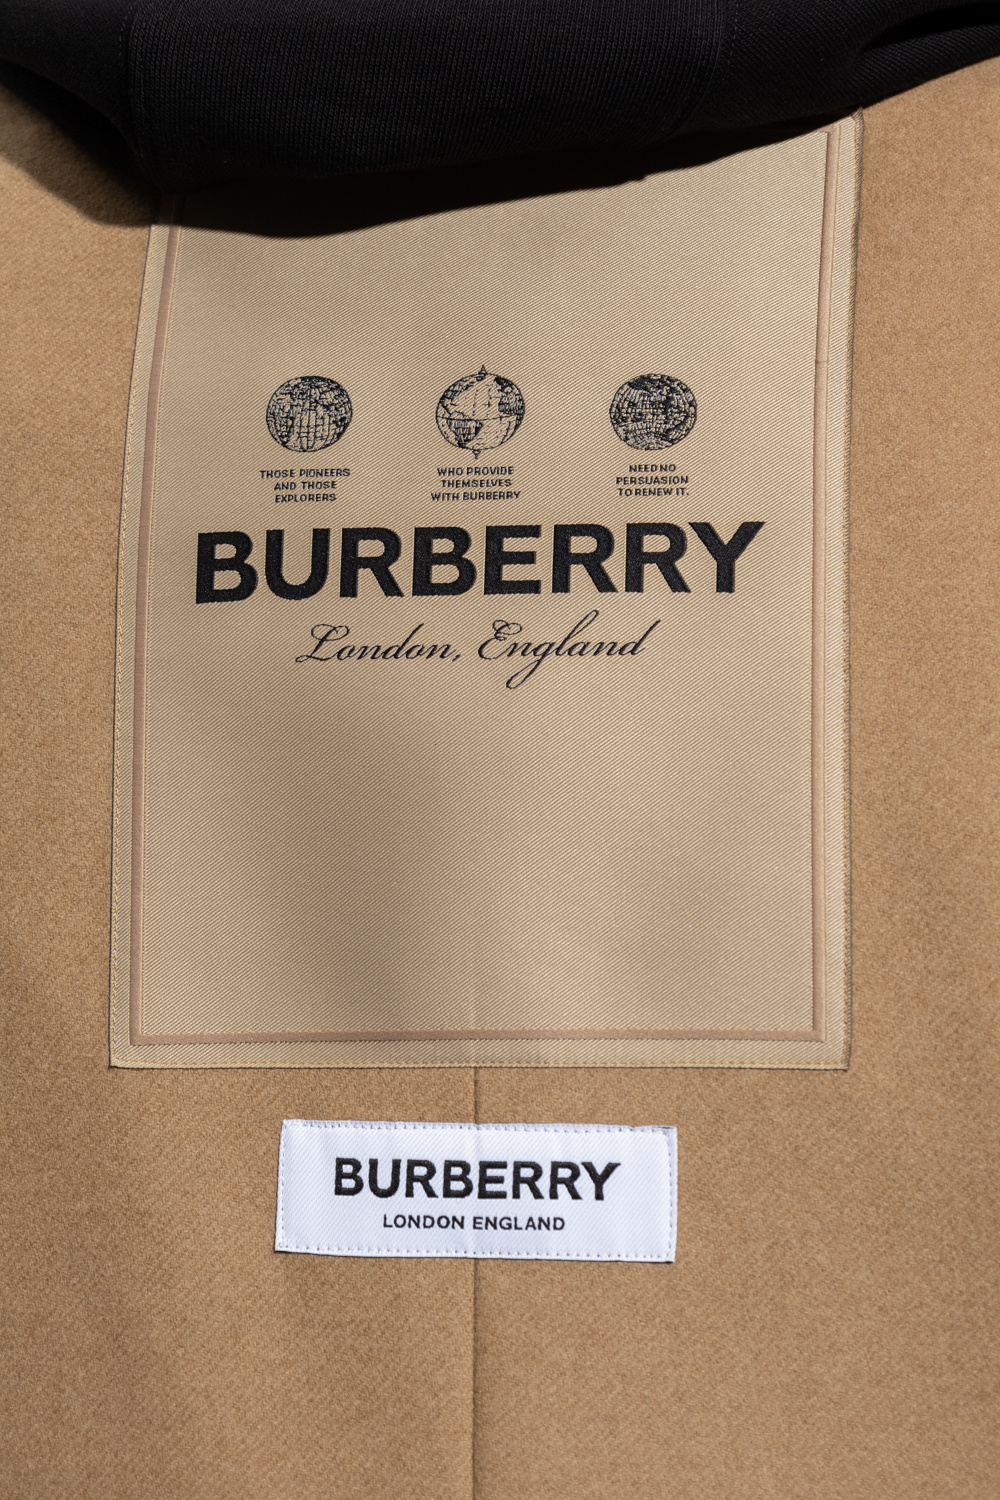 Burberry ‘Hawkhurst’ coat